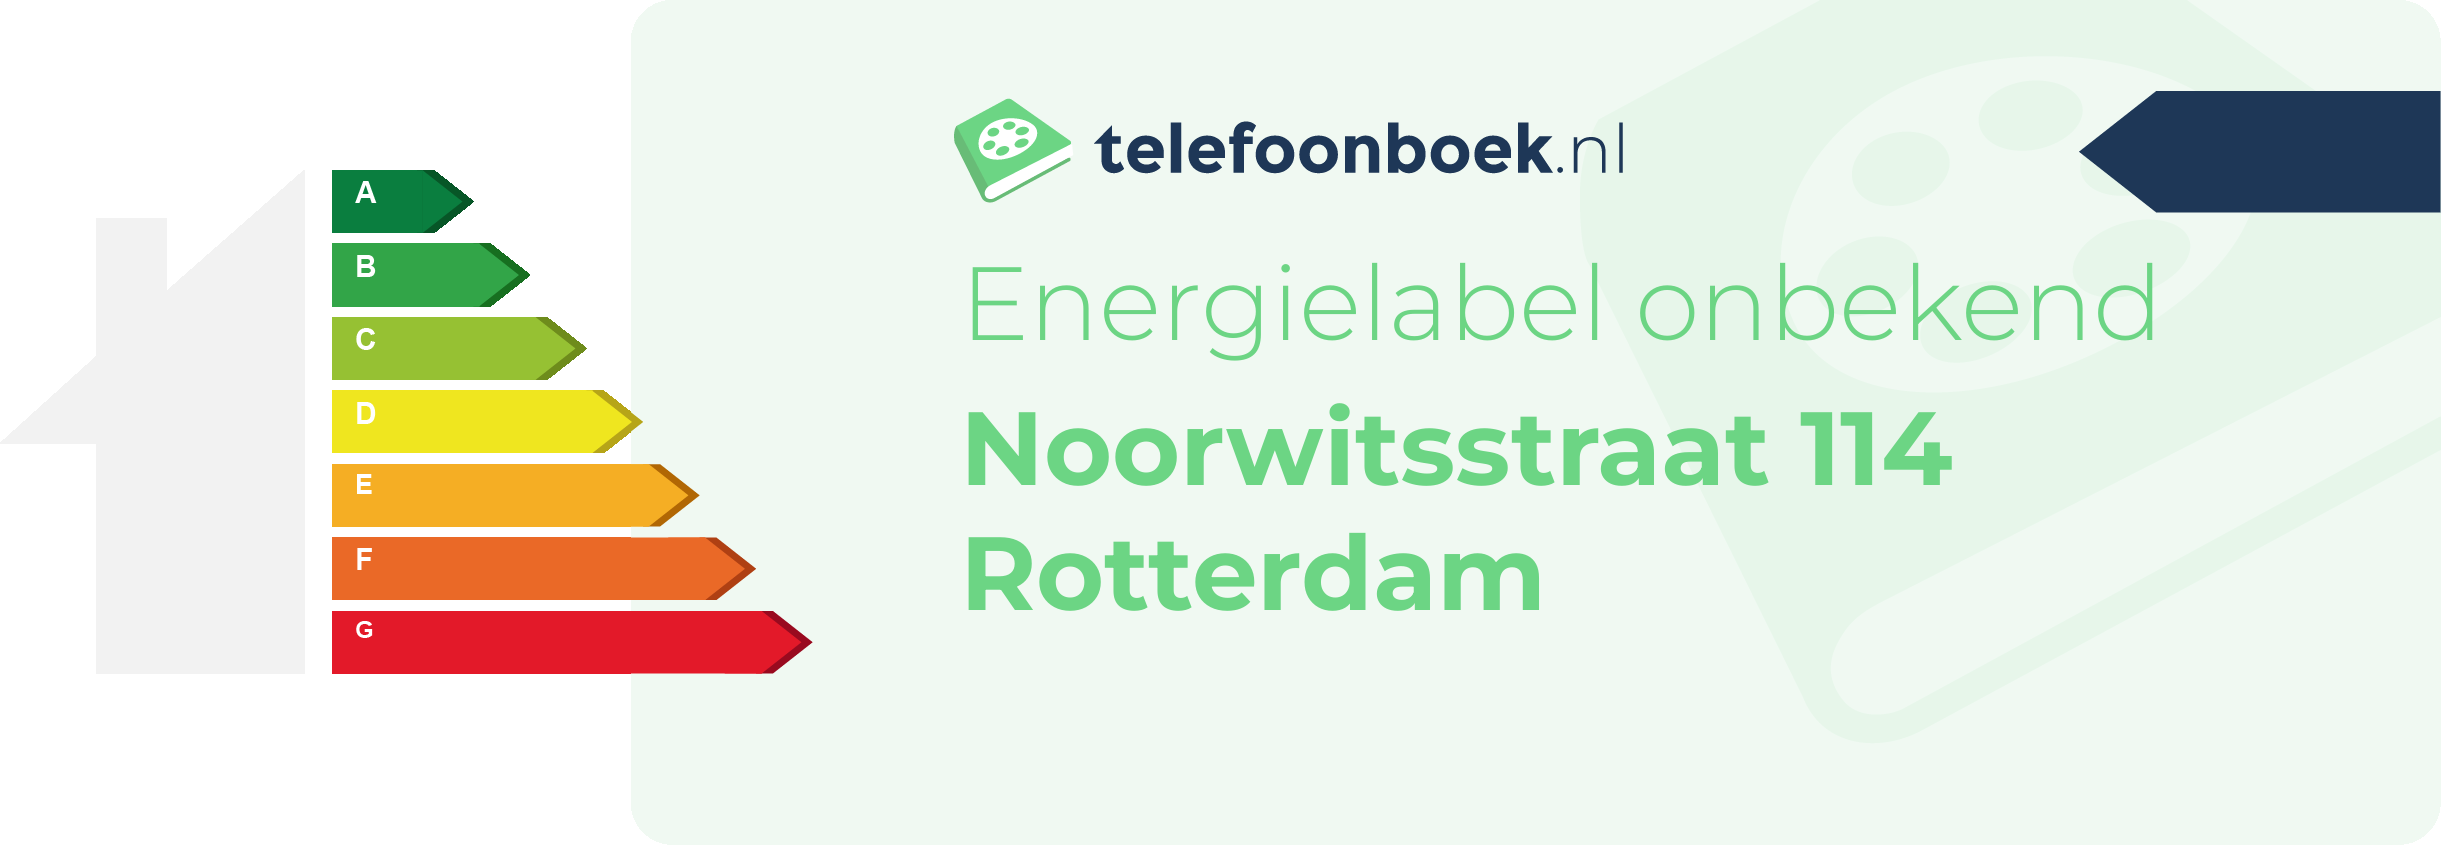 Energielabel Noorwitsstraat 114 Rotterdam